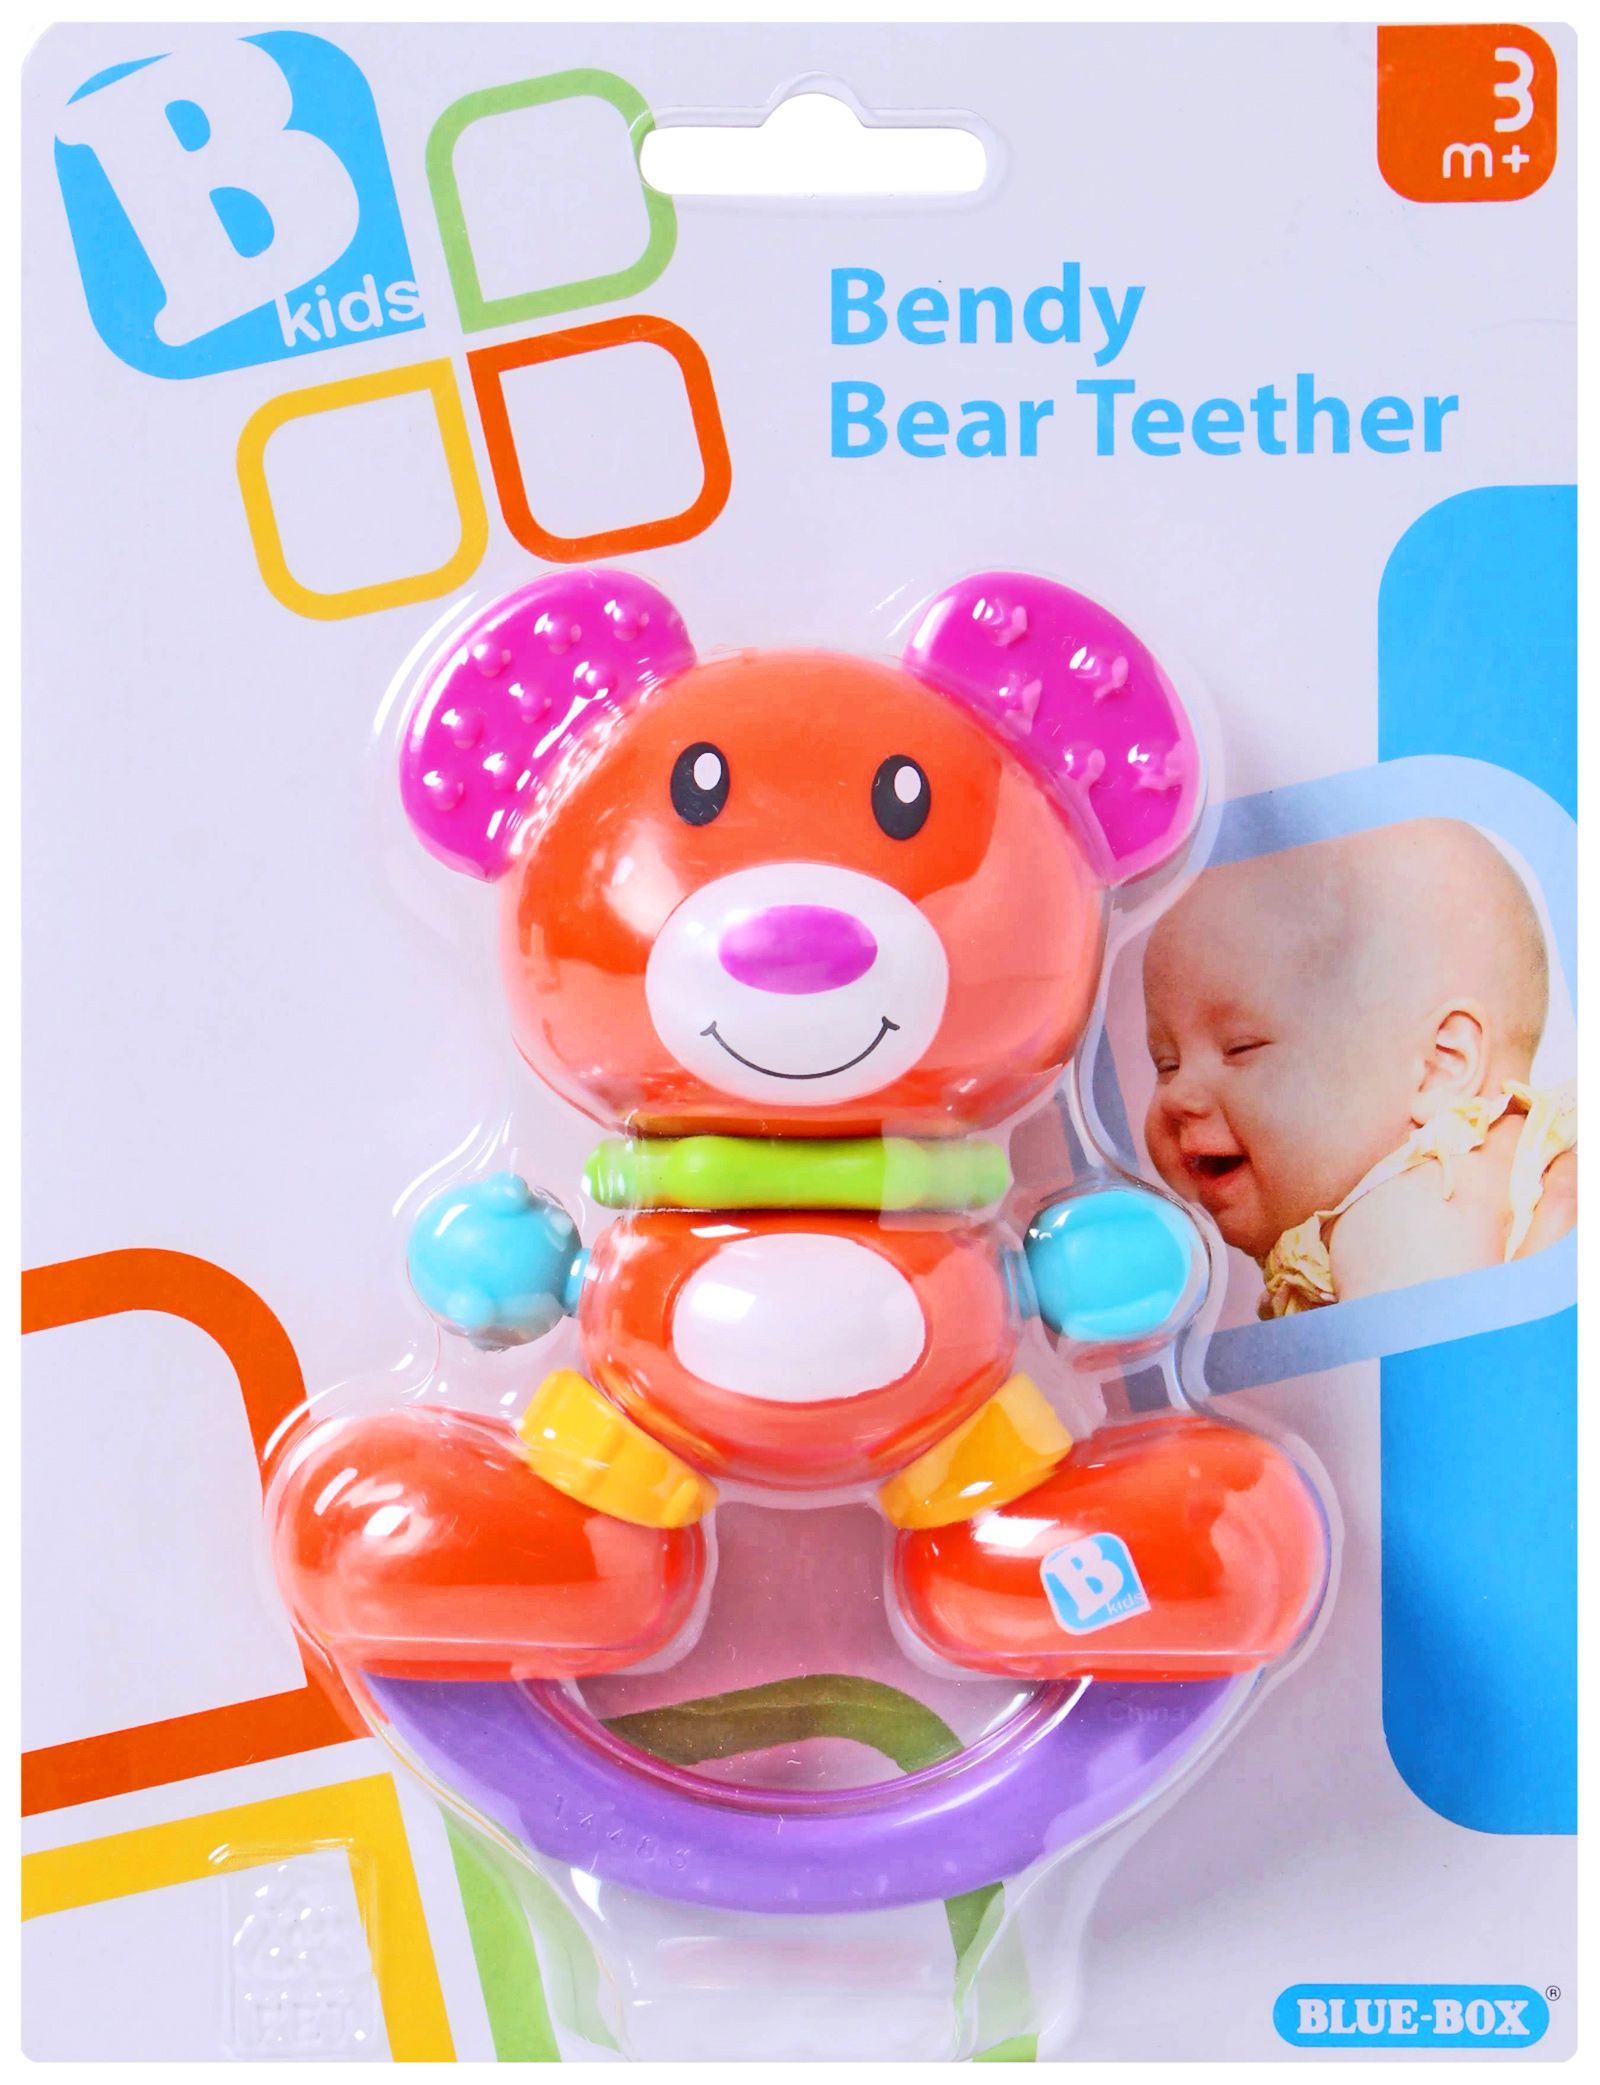 Bkids - Bendy Bear Teether